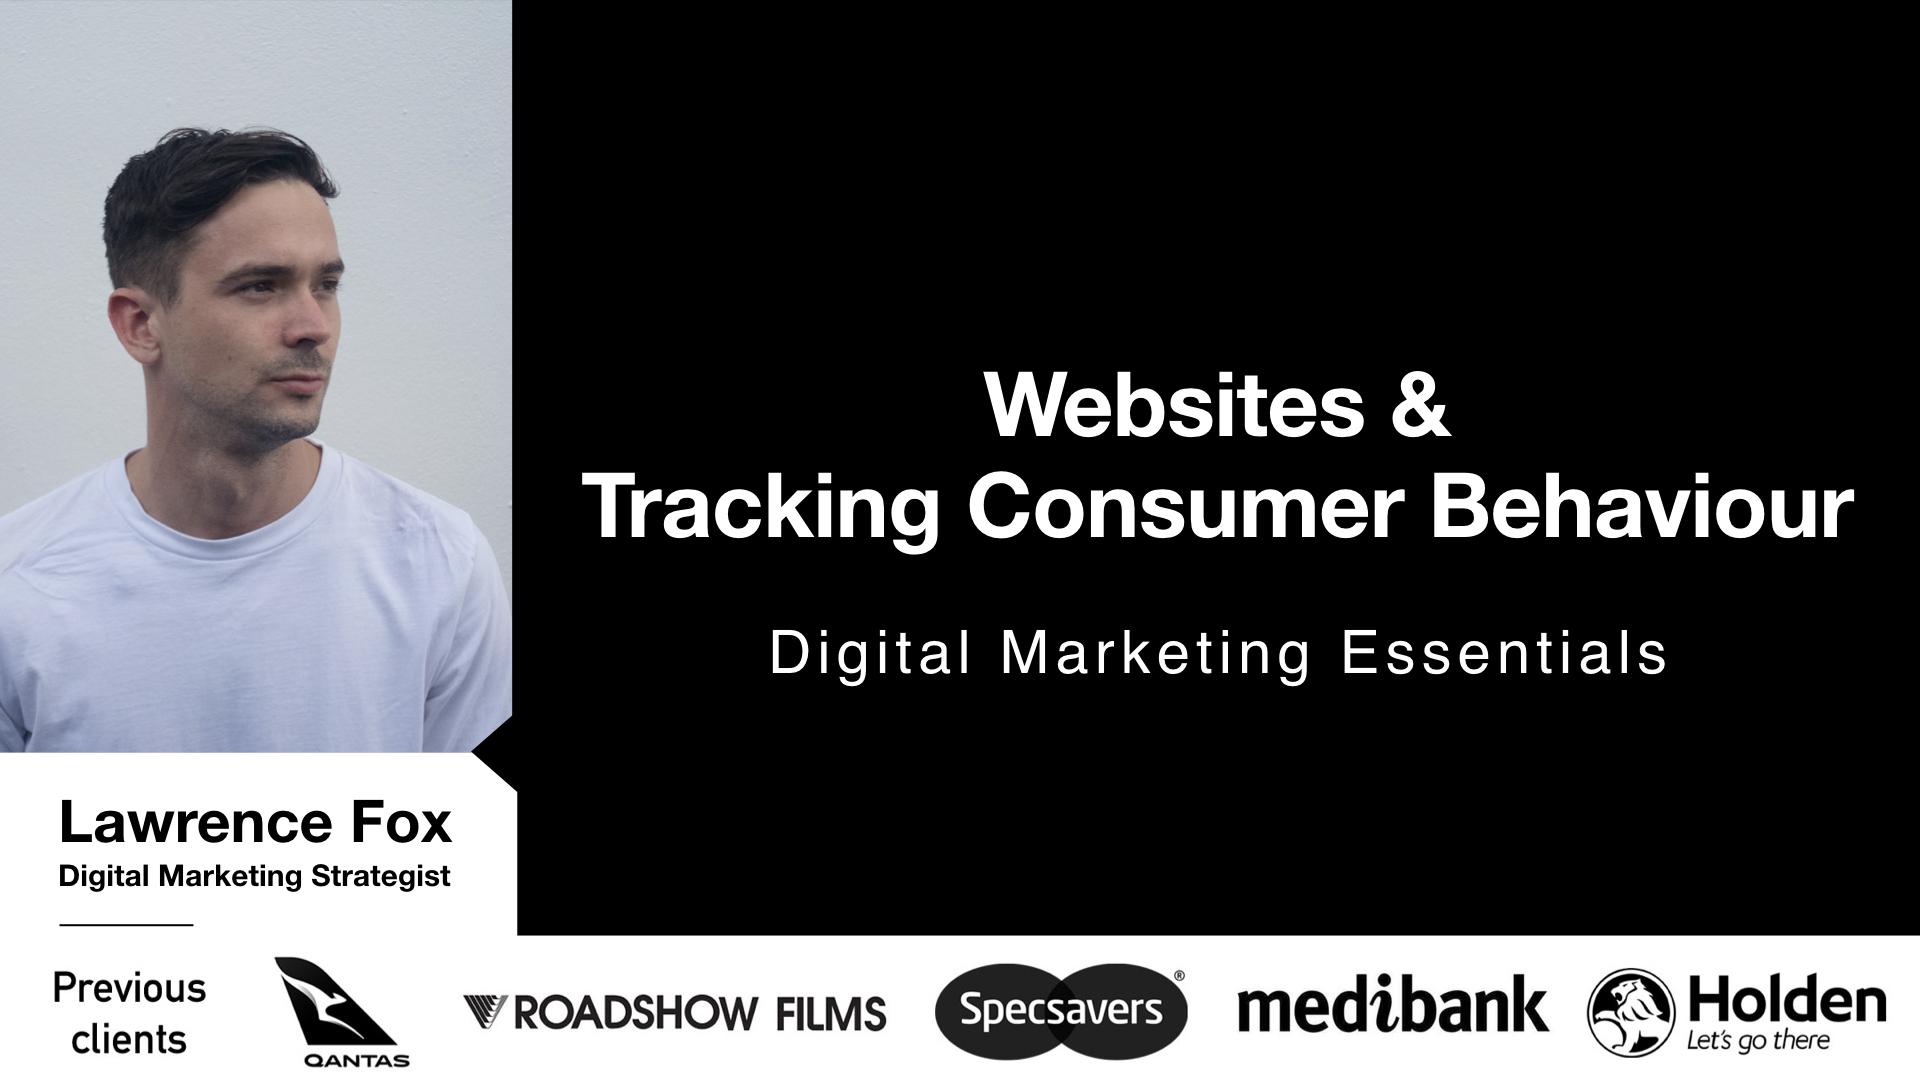 Digital Marketing Essentials - Websites & Tracking Consumer Behaviour